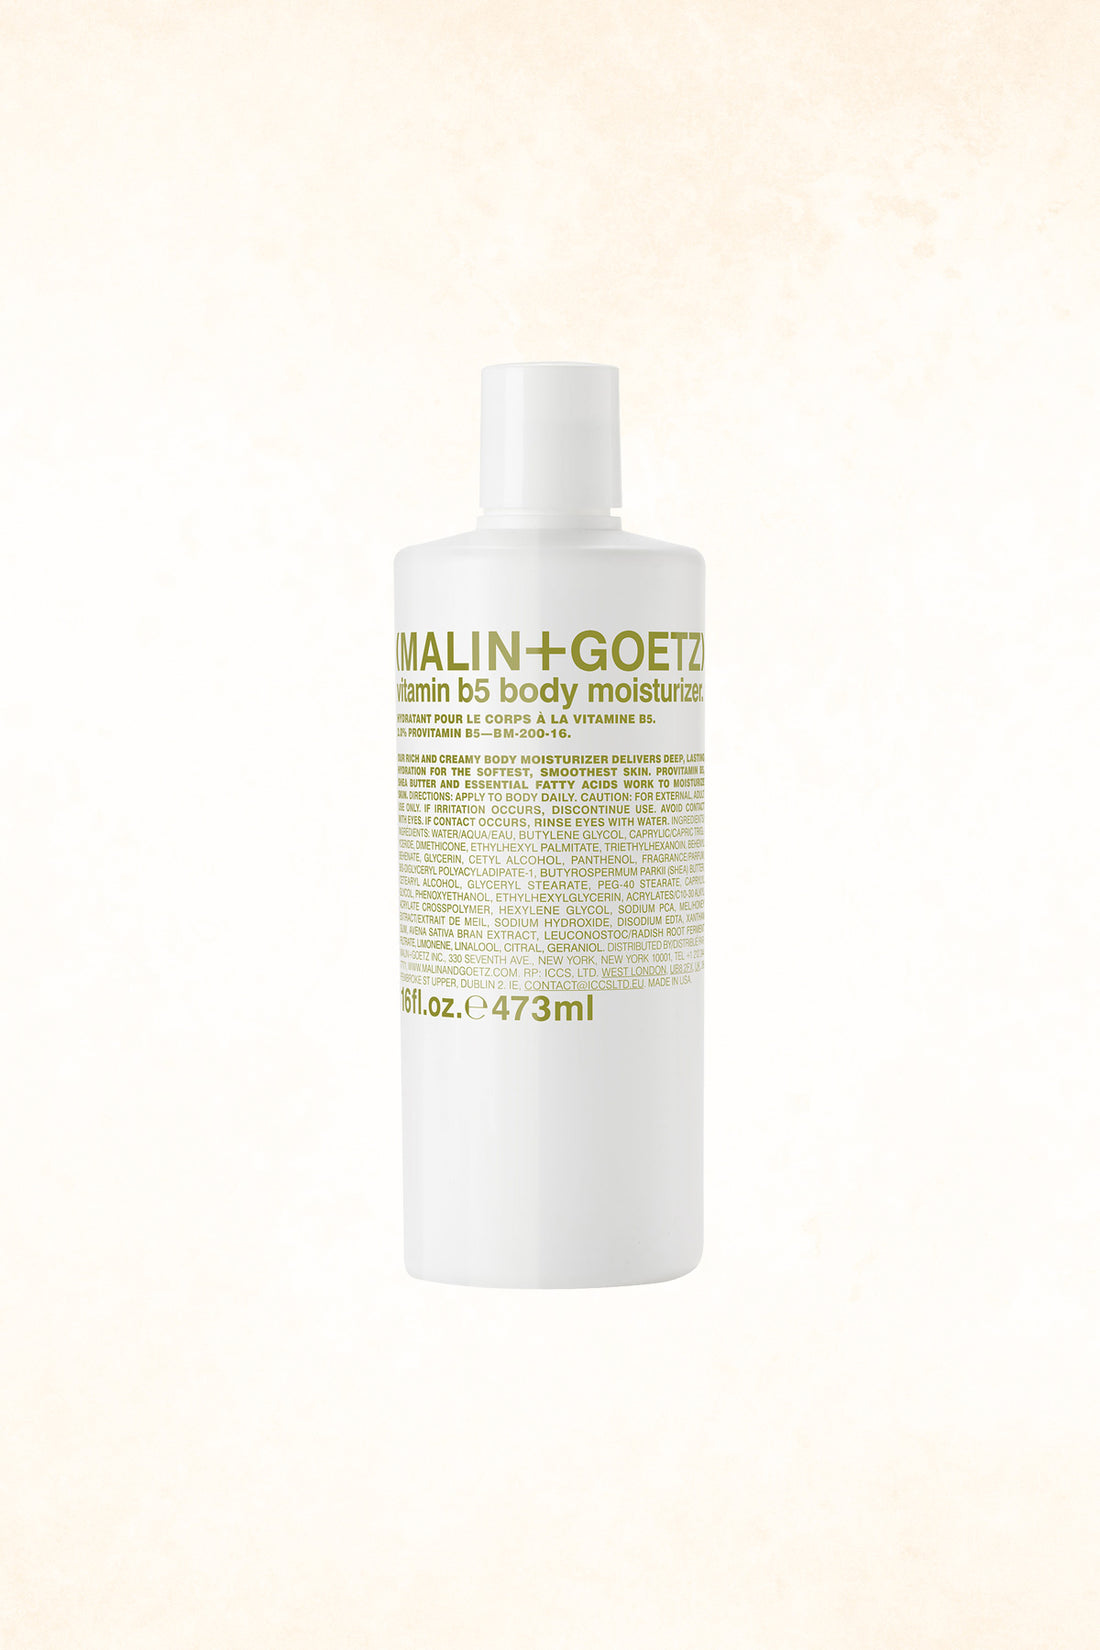 Malin+Goetz – Vitamin B5 Body Moisturizer 16 oz / 473 ml